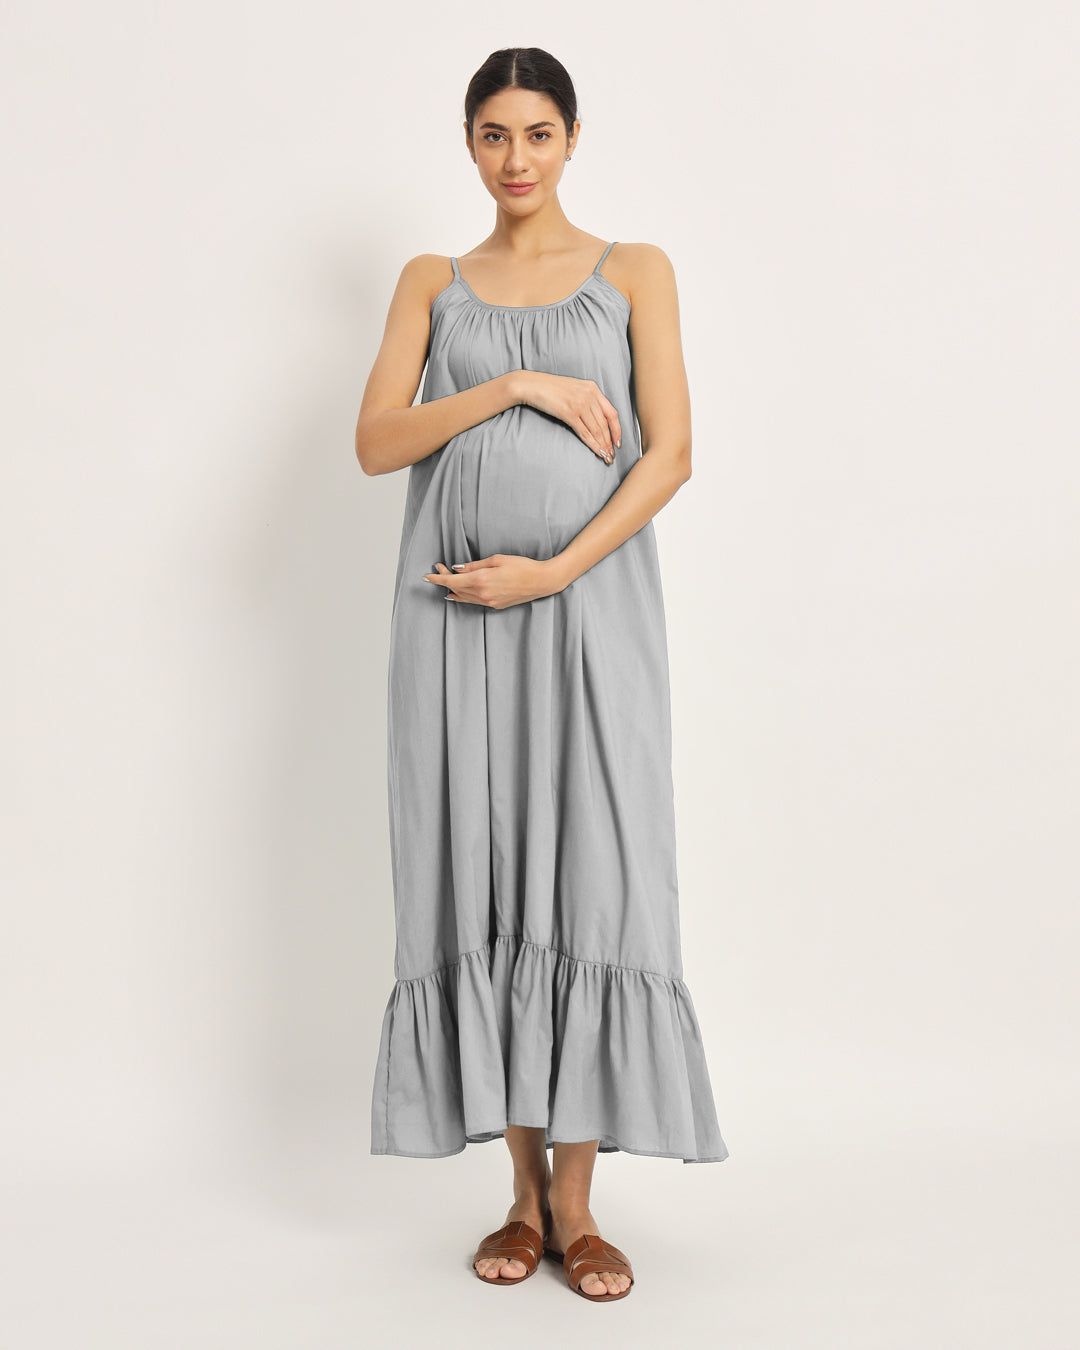 Iced Grey Belly Laugh Maternity & Nursing Dress